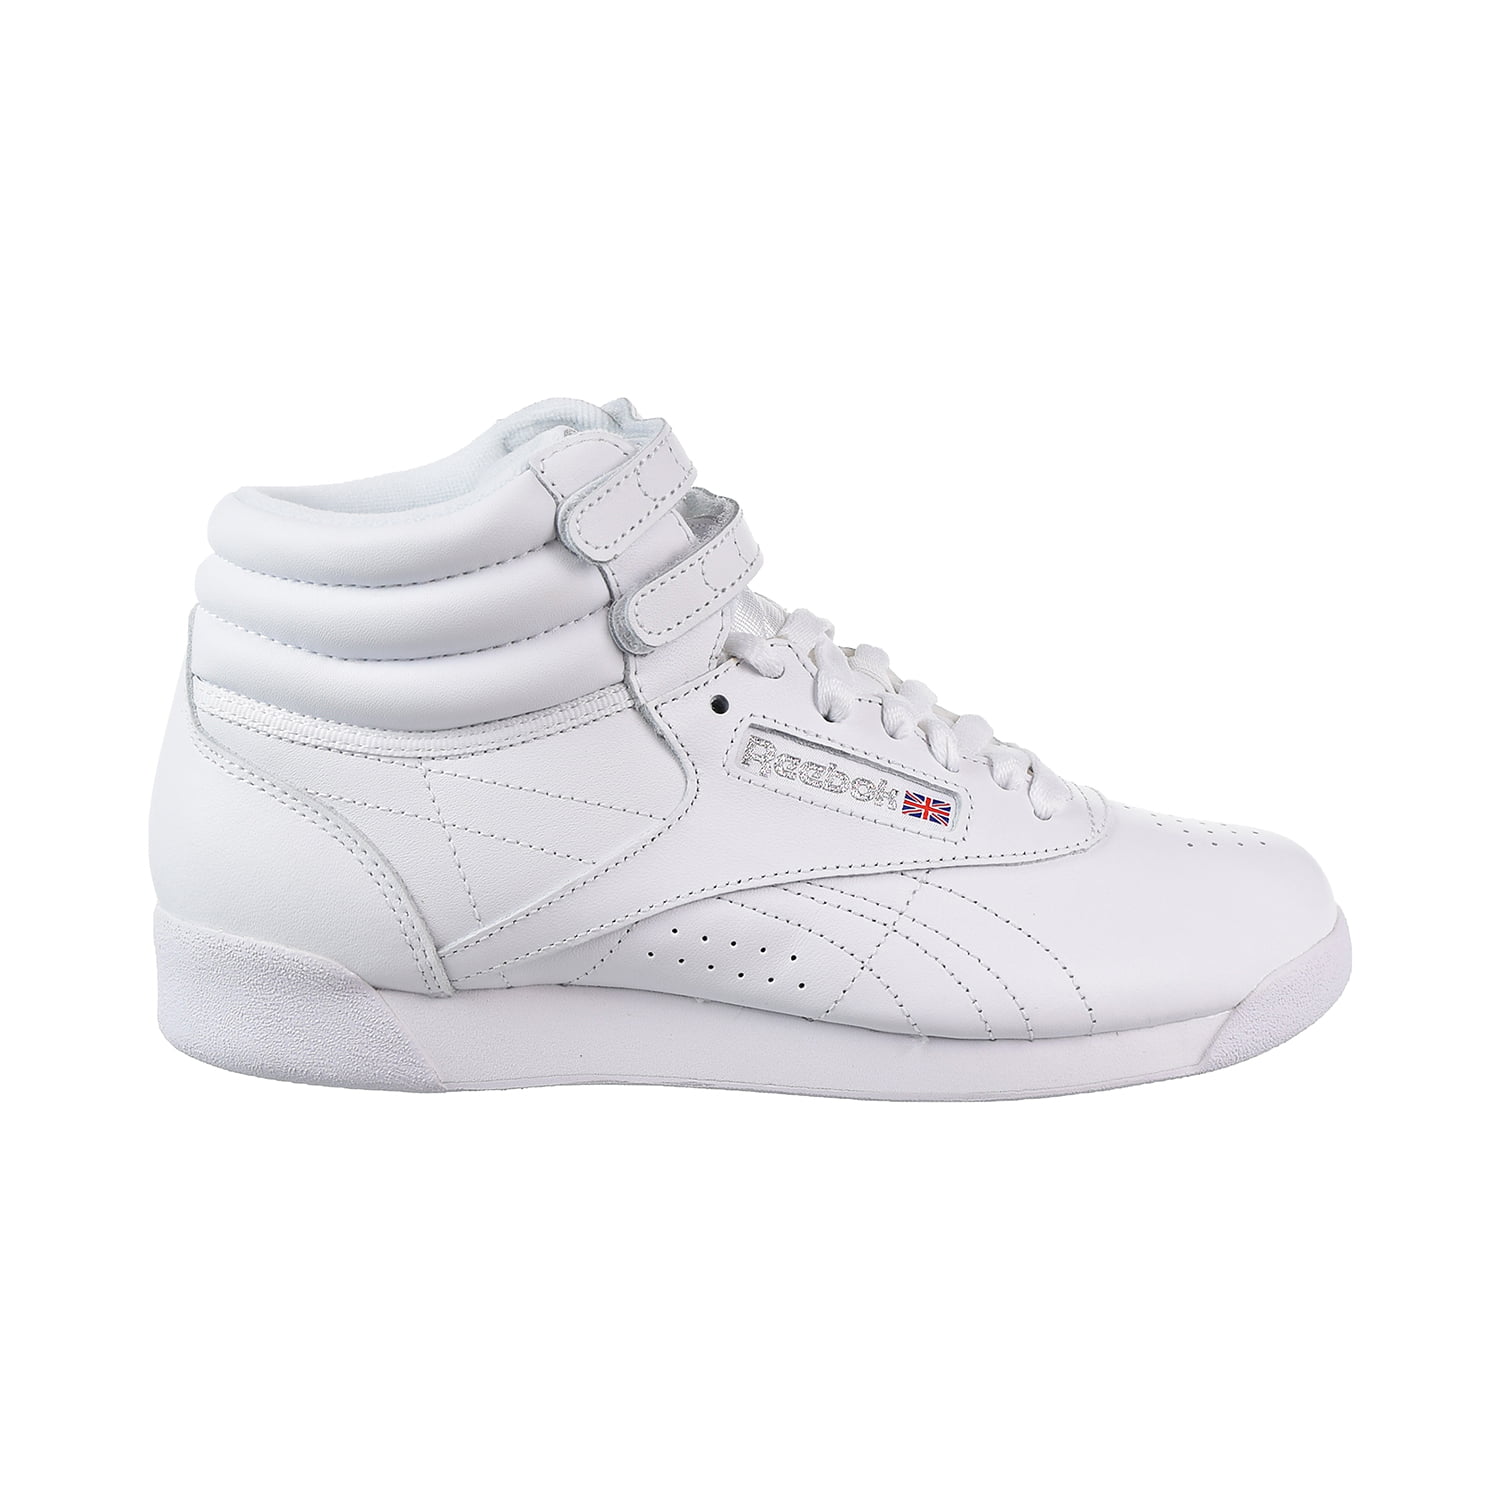 Reebok Freestyle Hi Women's Shoes White 